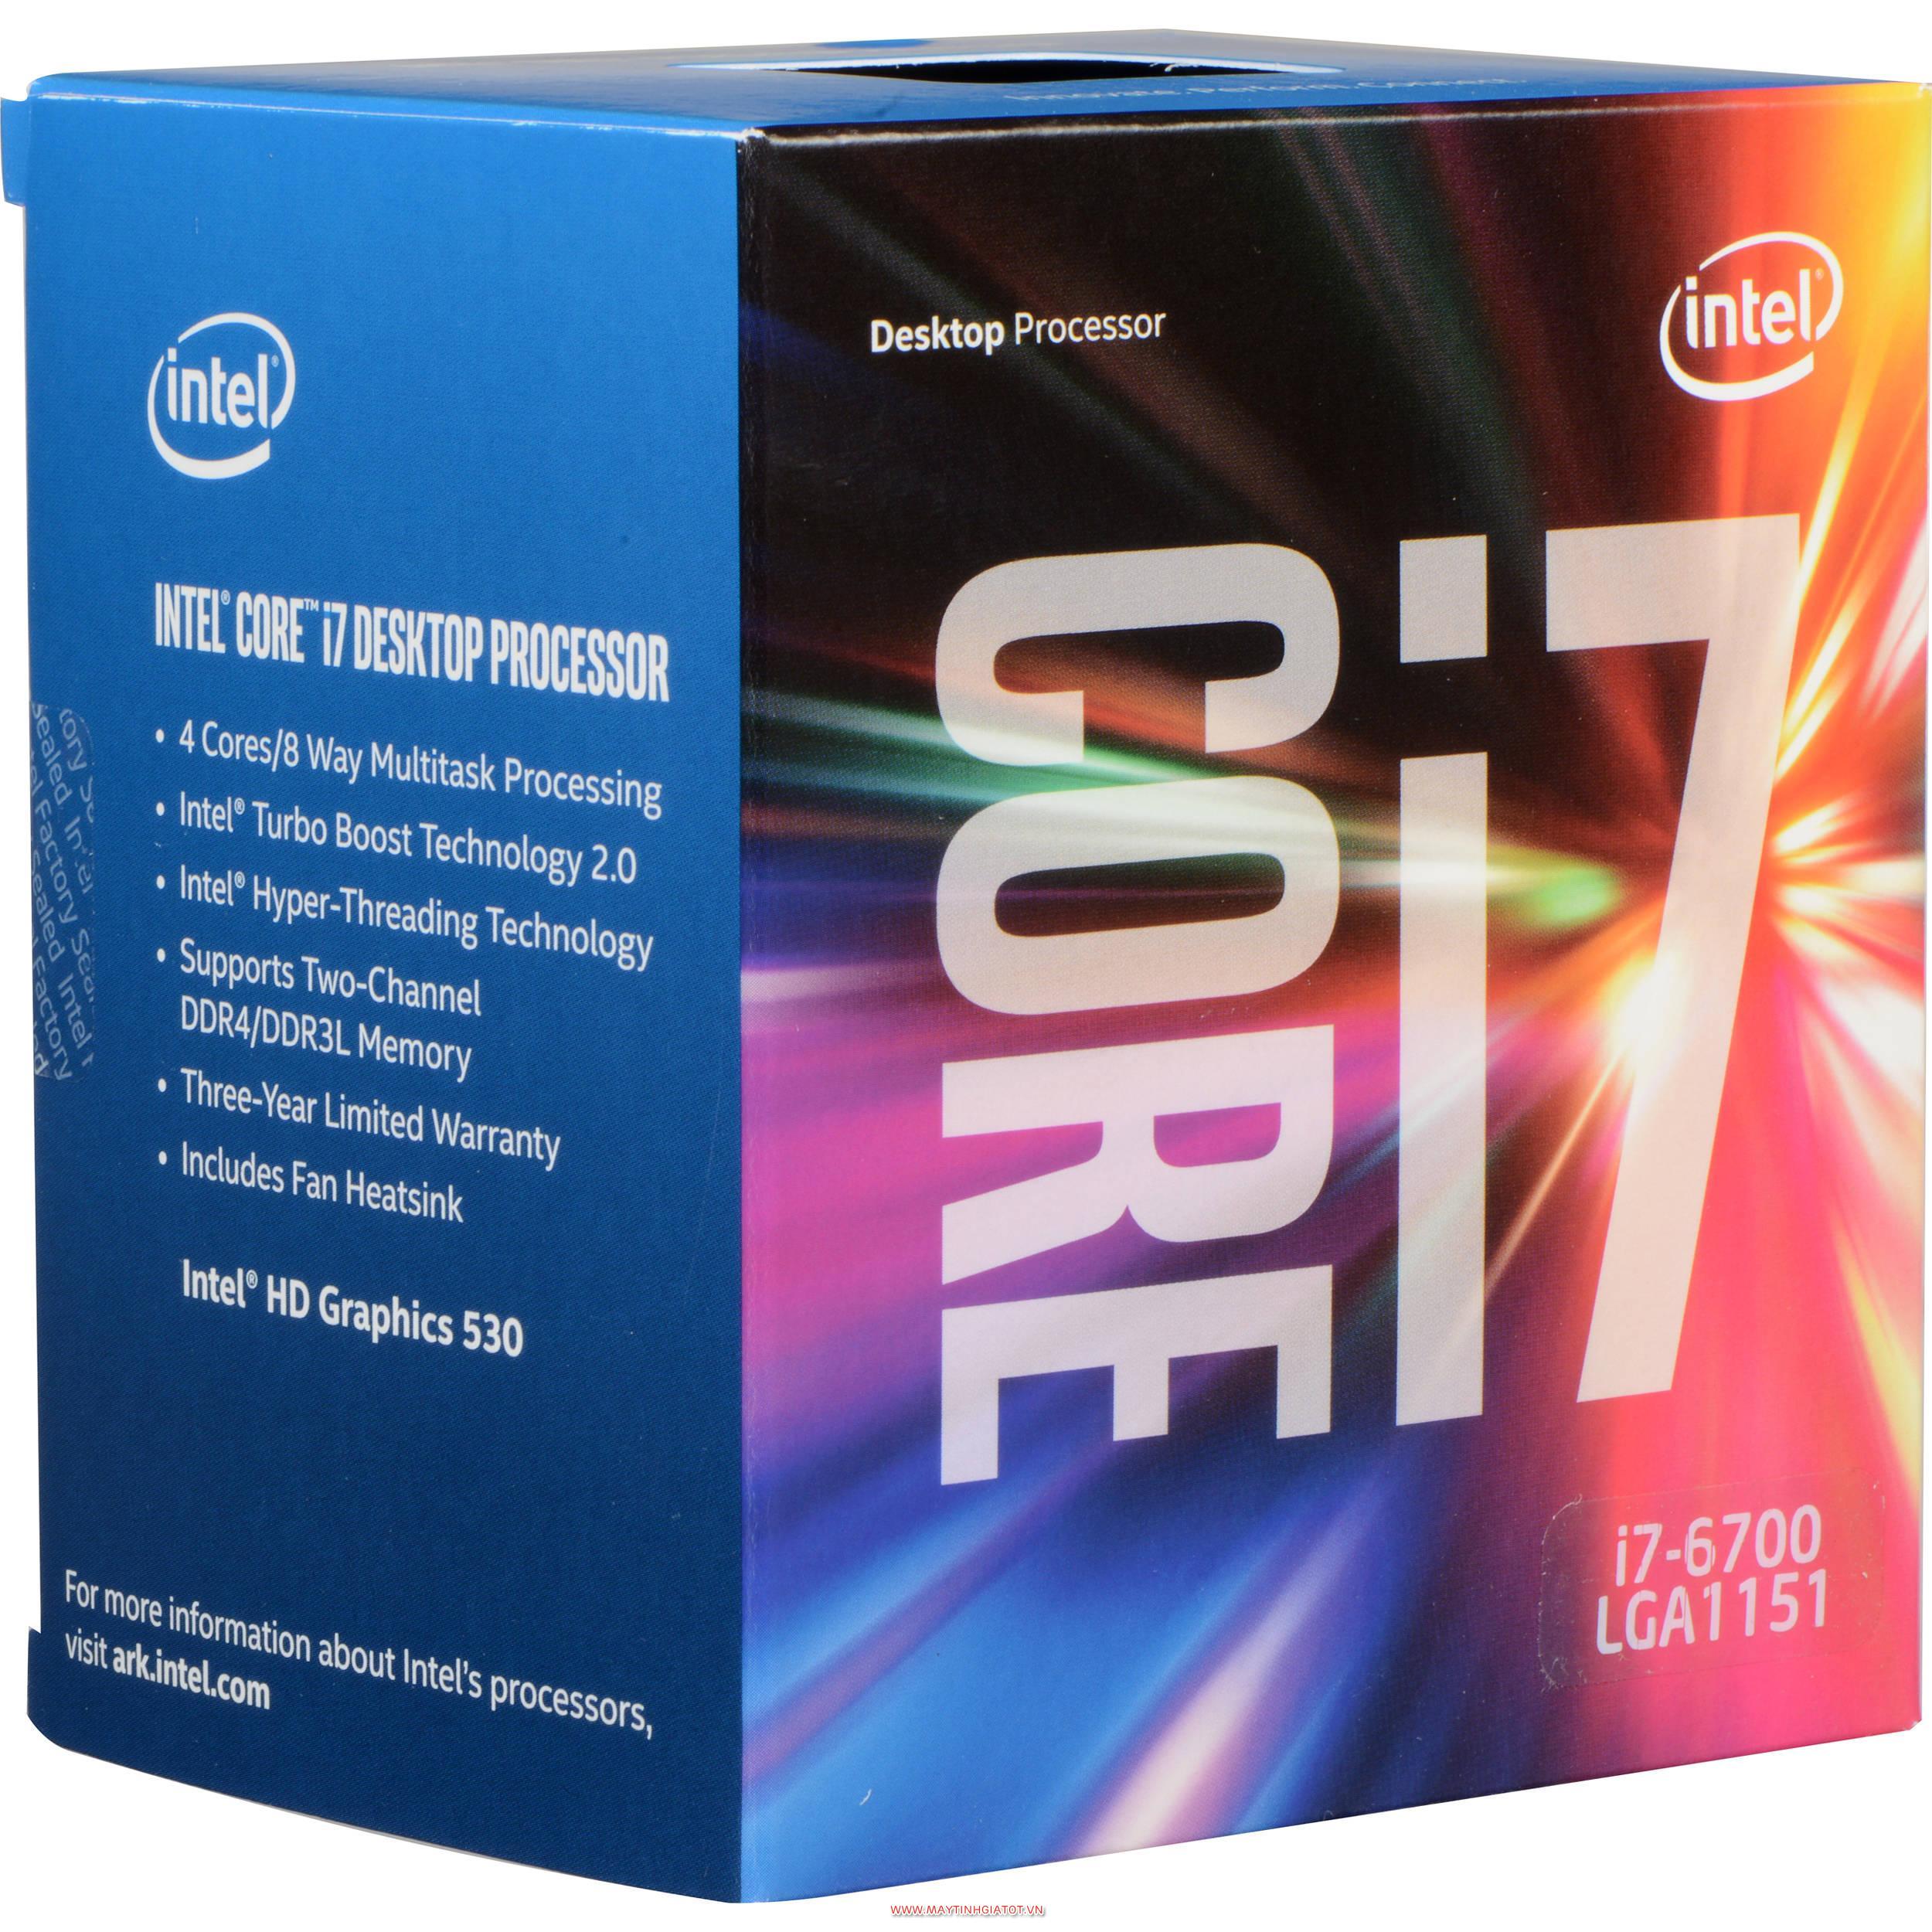 CPU INTEL CORE I7 6700 CŨ ( 3.4Ghz turbo 4.0Ghz / 8M cache 3L )